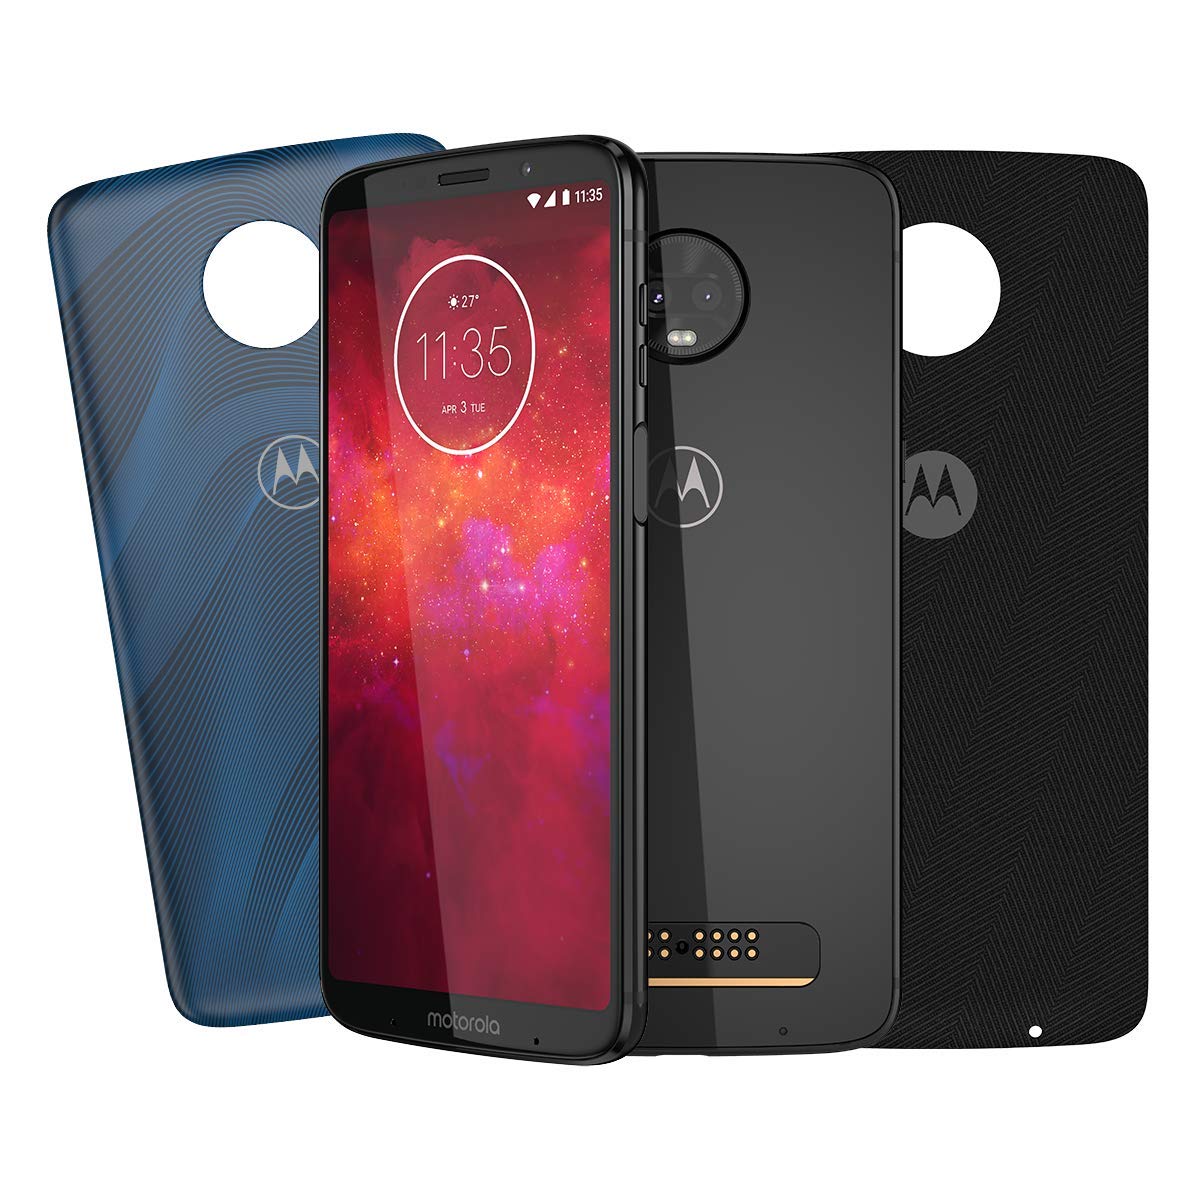 [Kit Especial Amazon] Smartphone Motorola Moto Z3 Play 128GB Ônix + 2 Moto Snap Style Shells Cores Flow e Nylon